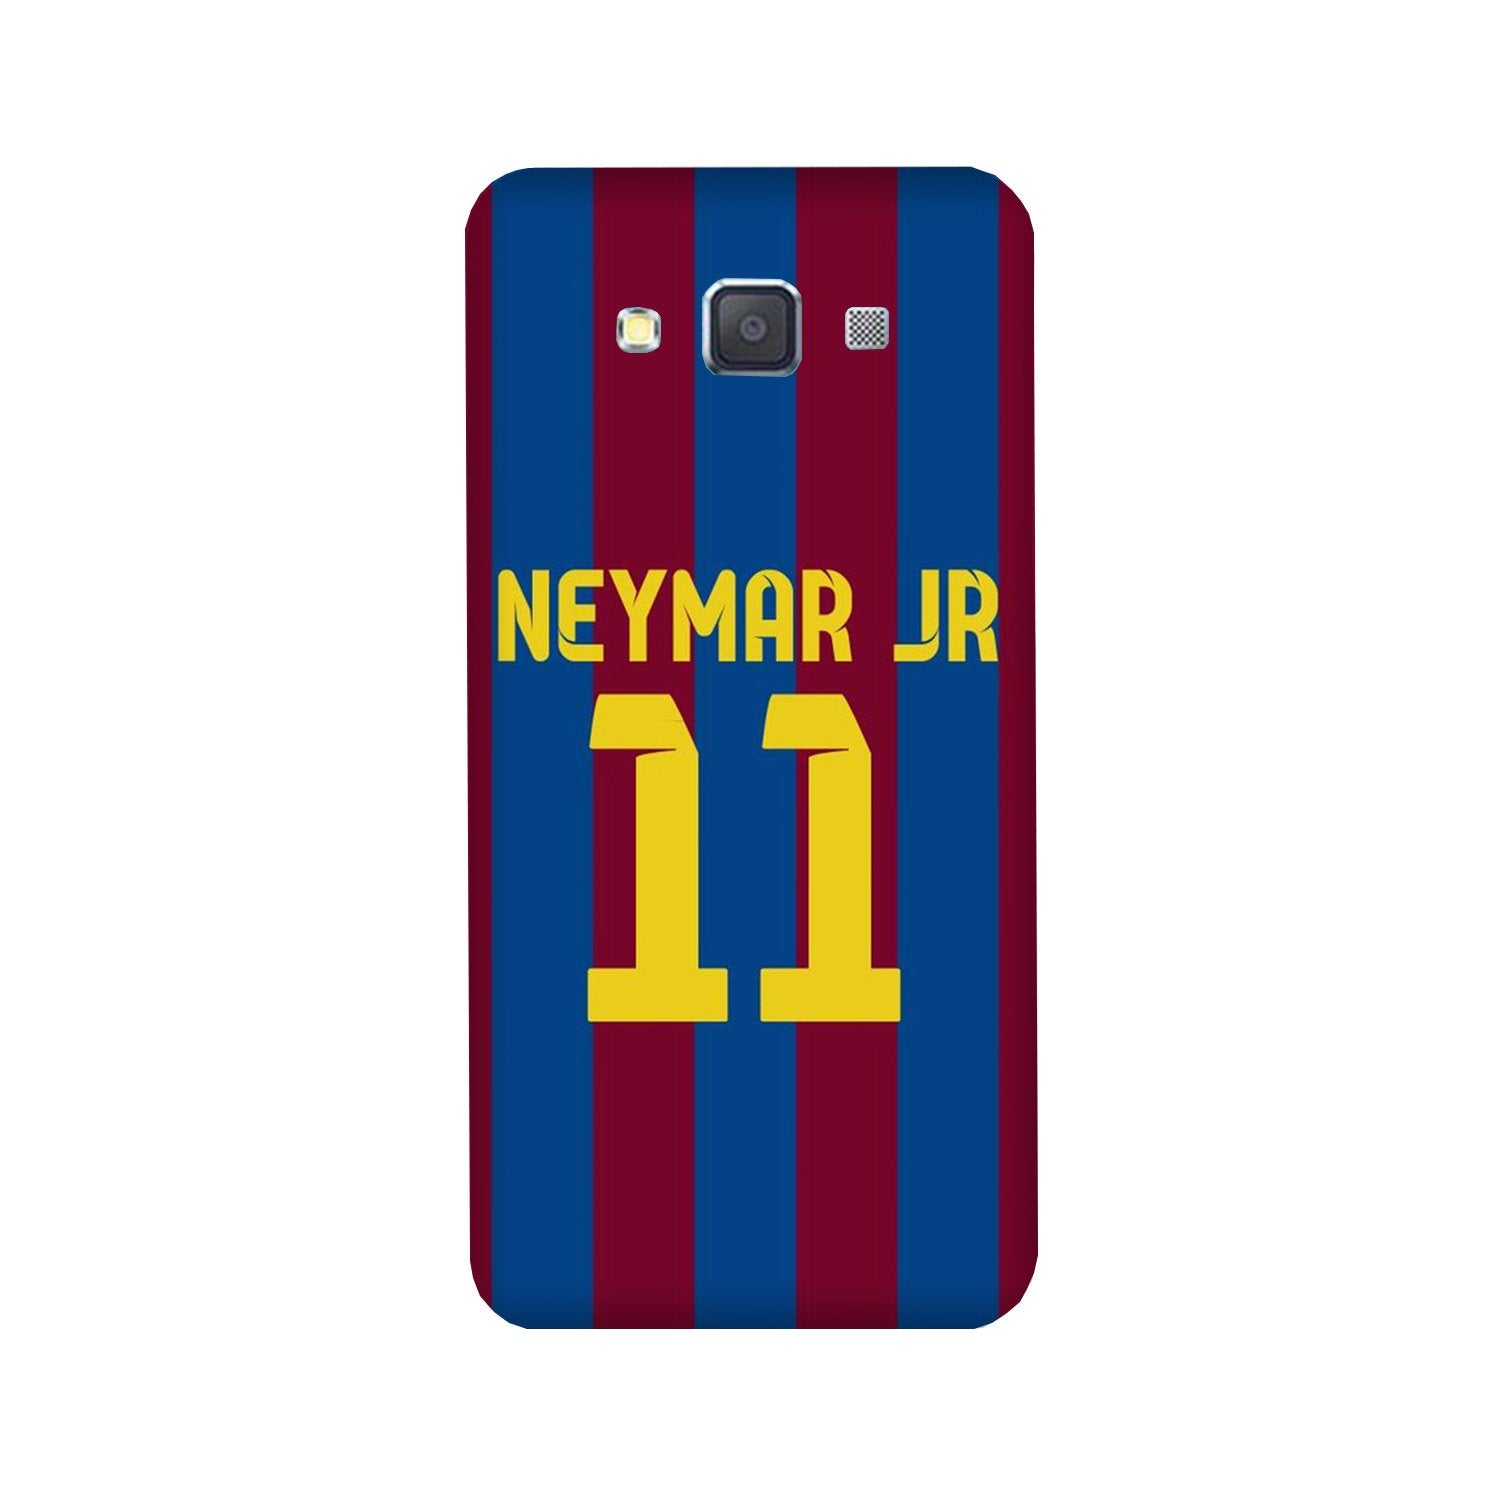 Neymar Jr Case for Galaxy E5(Design - 162)